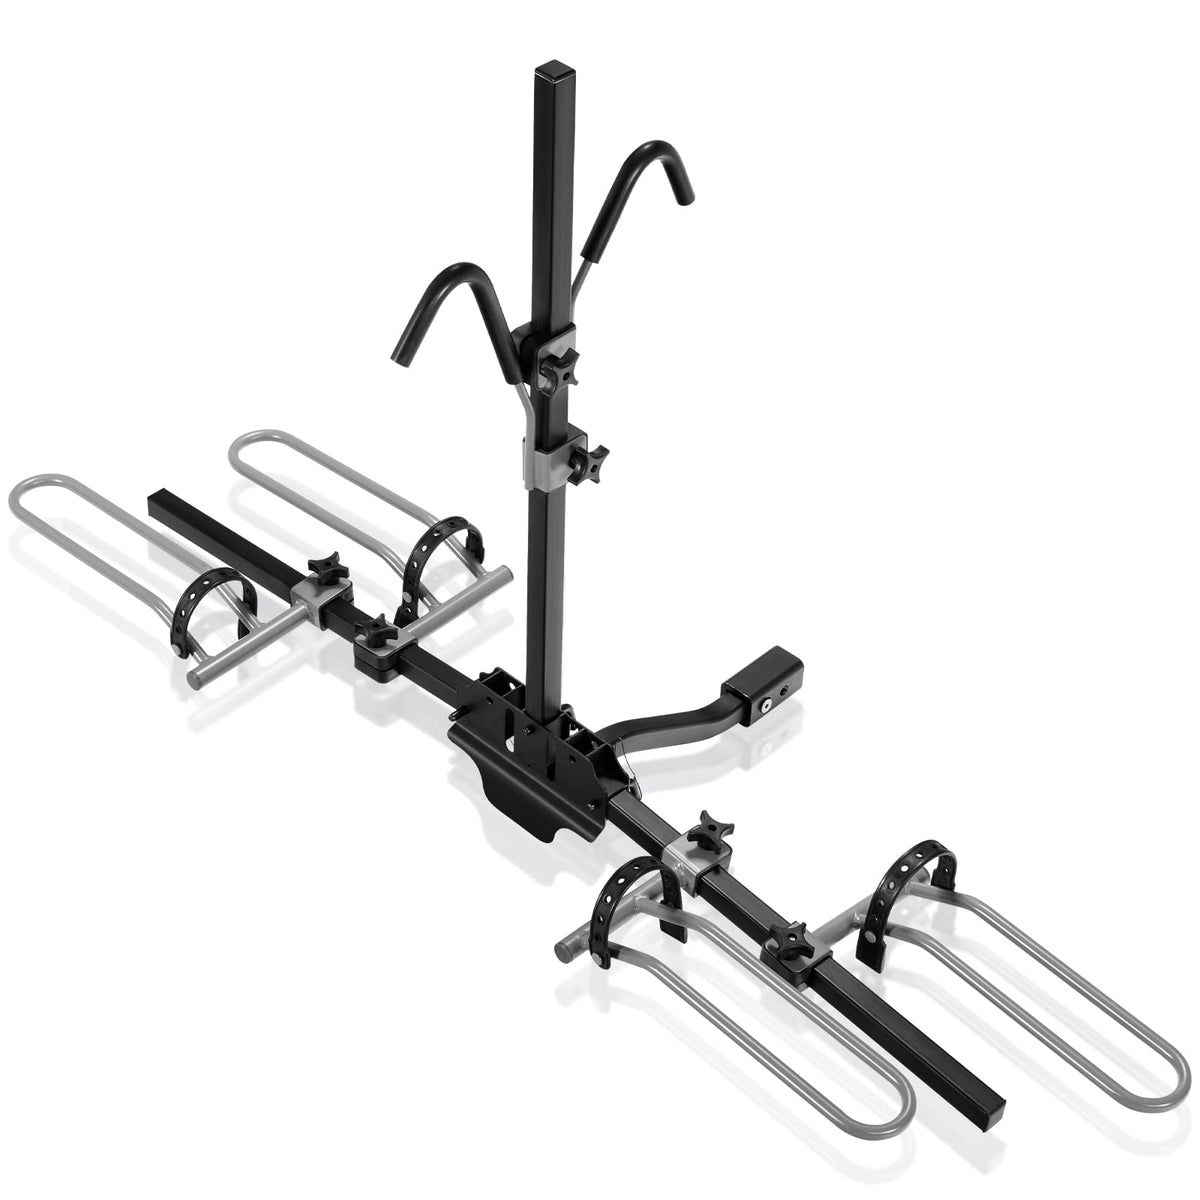 Goplus Hitch Mount Bike Rack, Folding 2-Bike Platform Style Carrier for MTB - GoplusUS